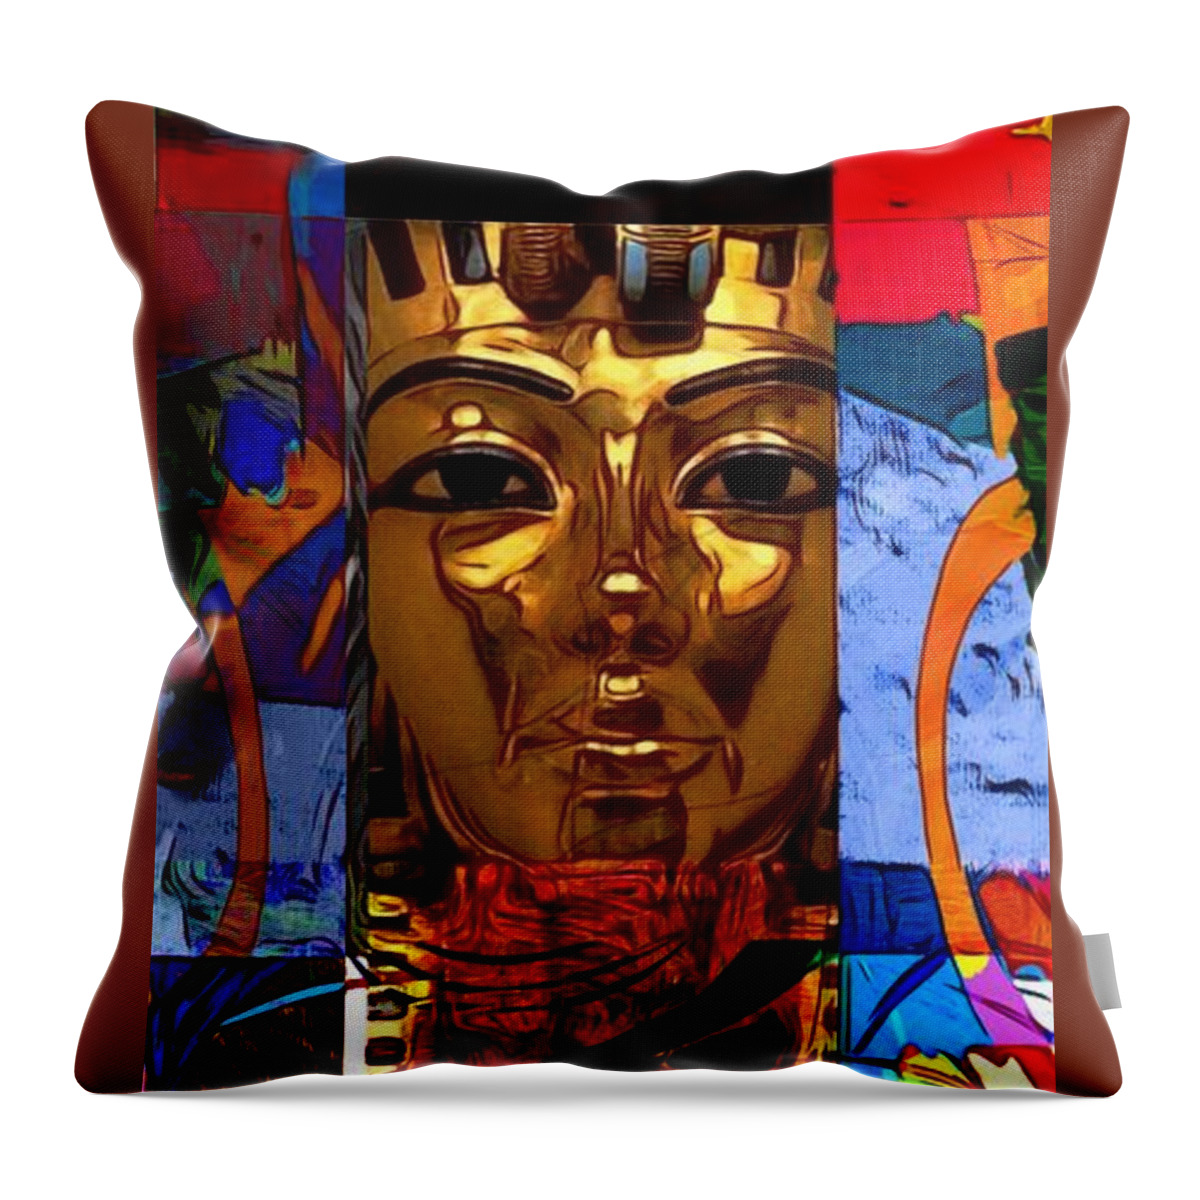 King Tut Throw Pillow featuring the digital art I Built Pyramids 2 by Joe Roache